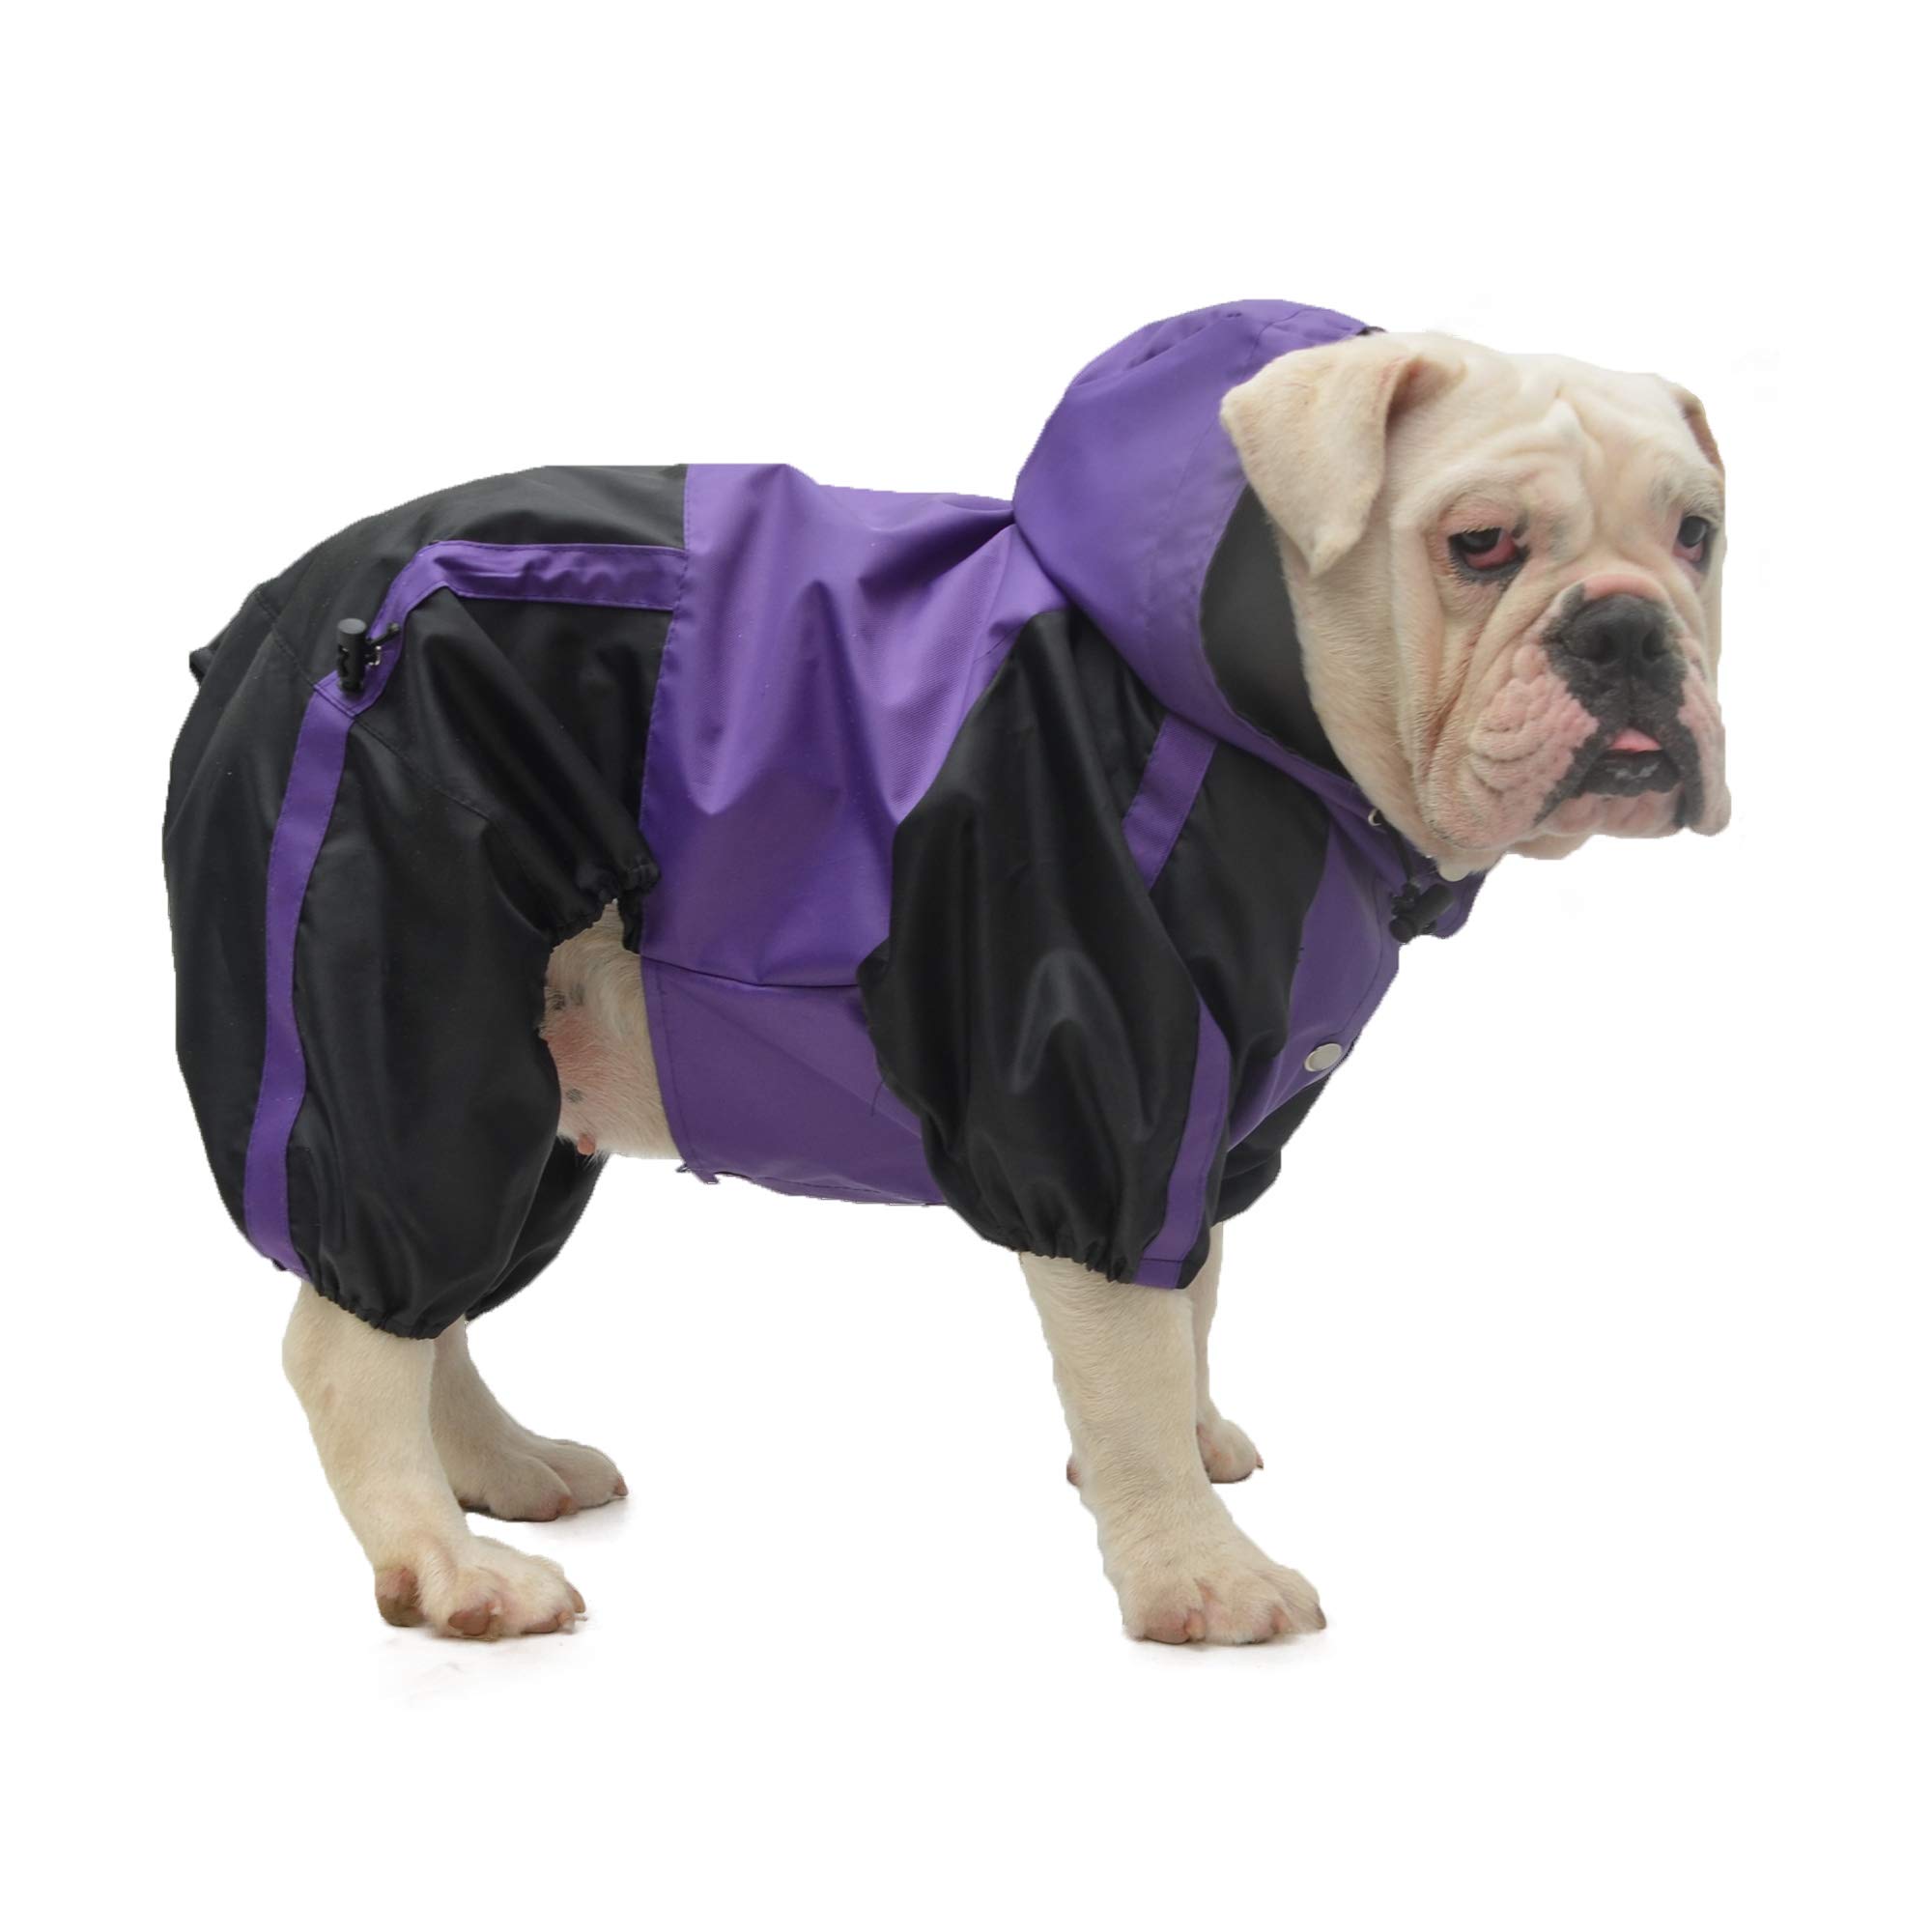 Lovelonglong American Bully Pitbull Dog Hooded Raincoat Bulldog Rain Jacket Poncho Waterproof clothes with Hood Breathable 4 Fee